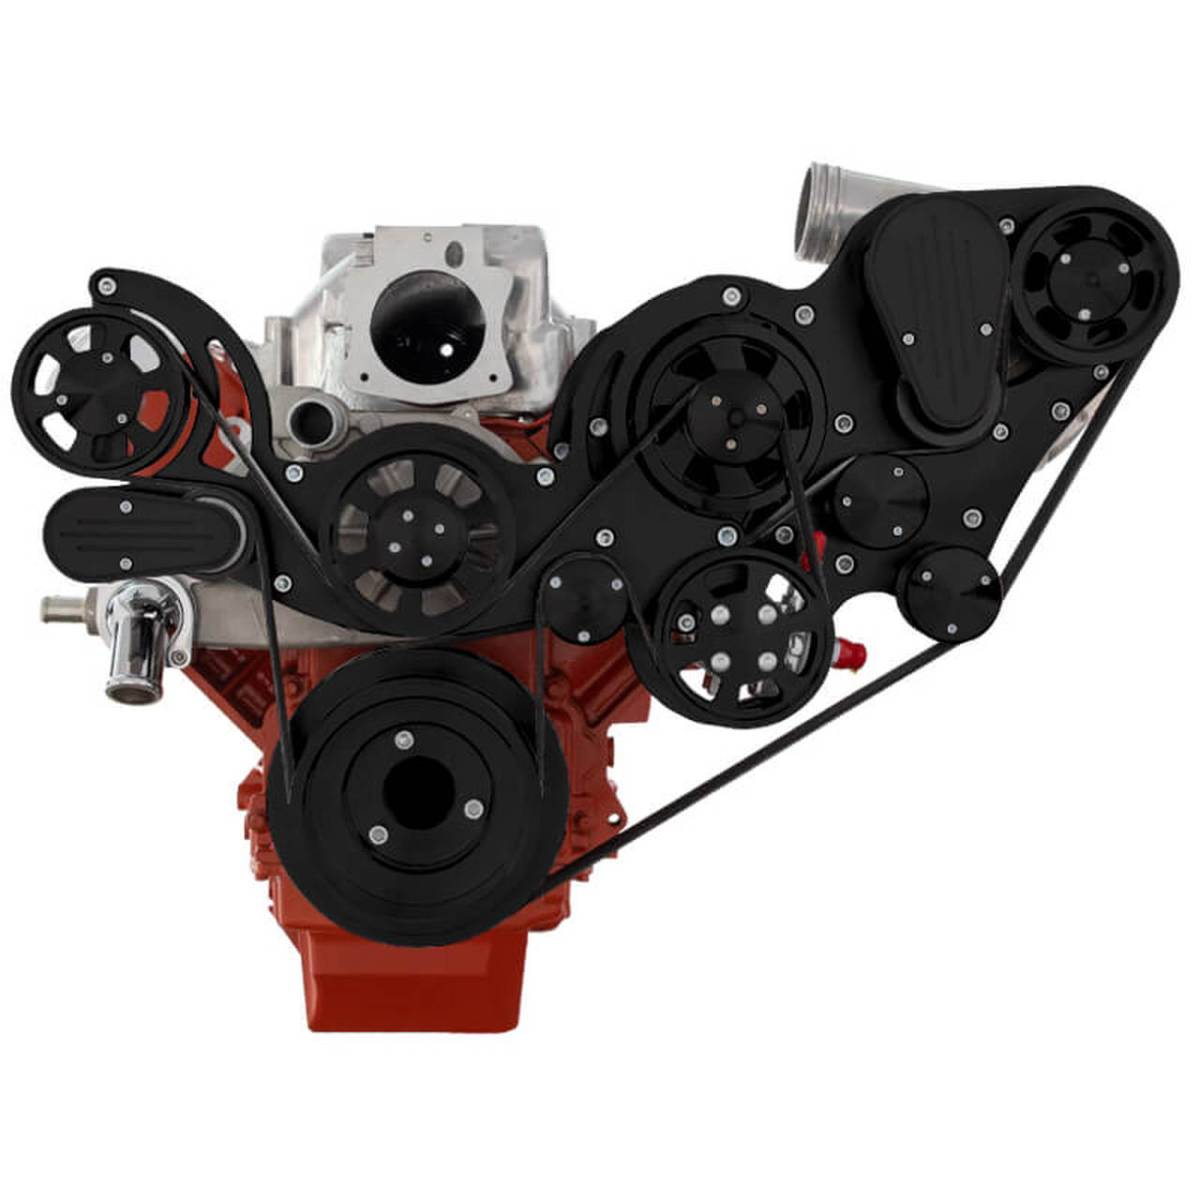 CVF Racing - CVF Wraptor Chevy LS Engine Procharger Serpentine Bracket System with Power Steering & Alternator - Black - Image 1